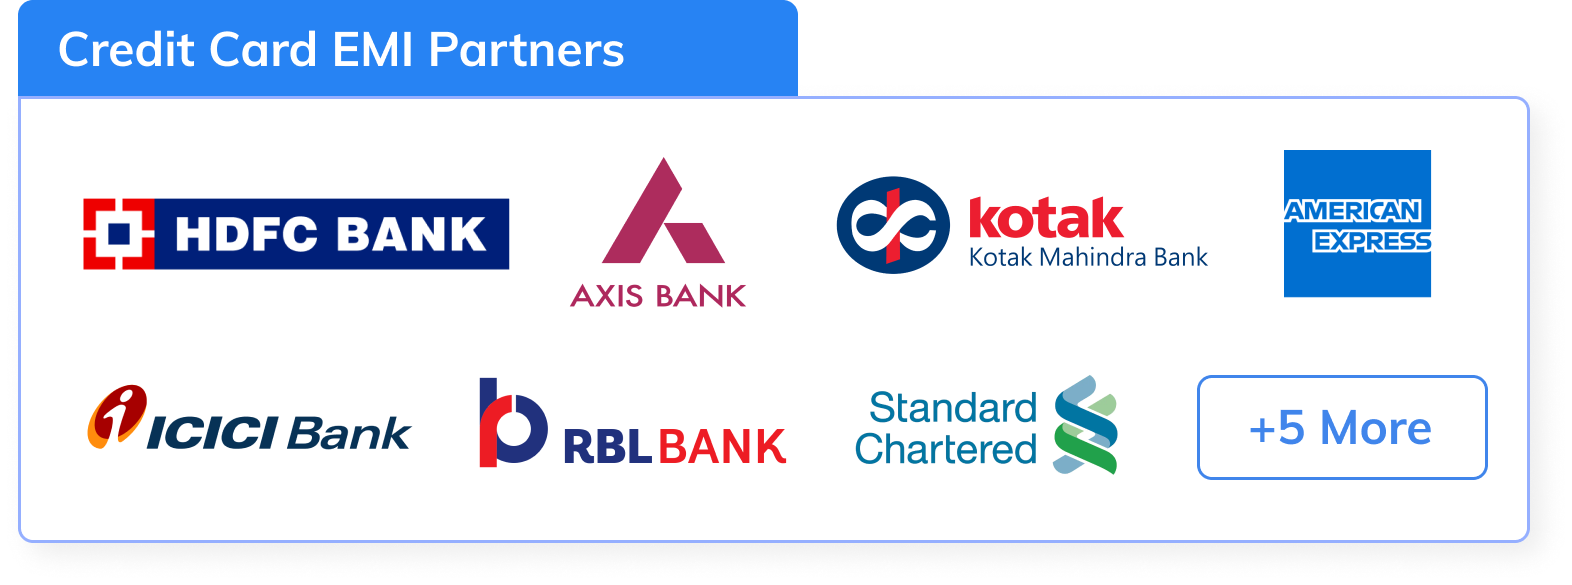 EMI Bank Partners Logo Group 1 + 12 More